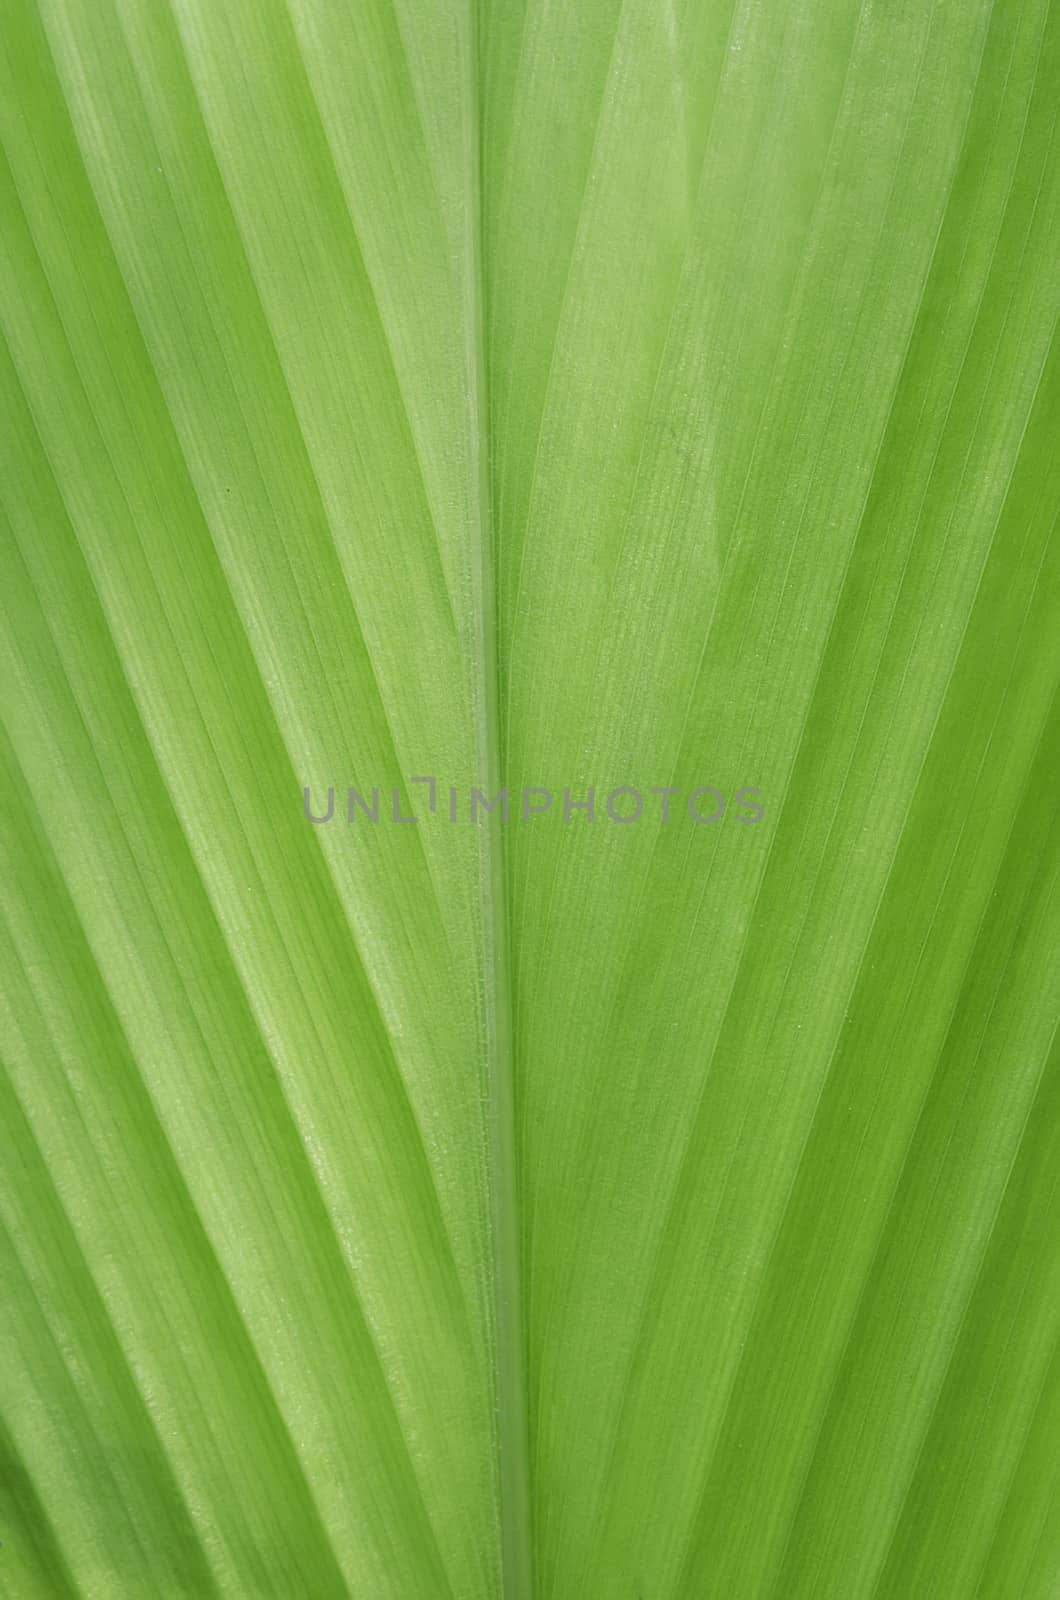 beautiful fresh green leaf as a background